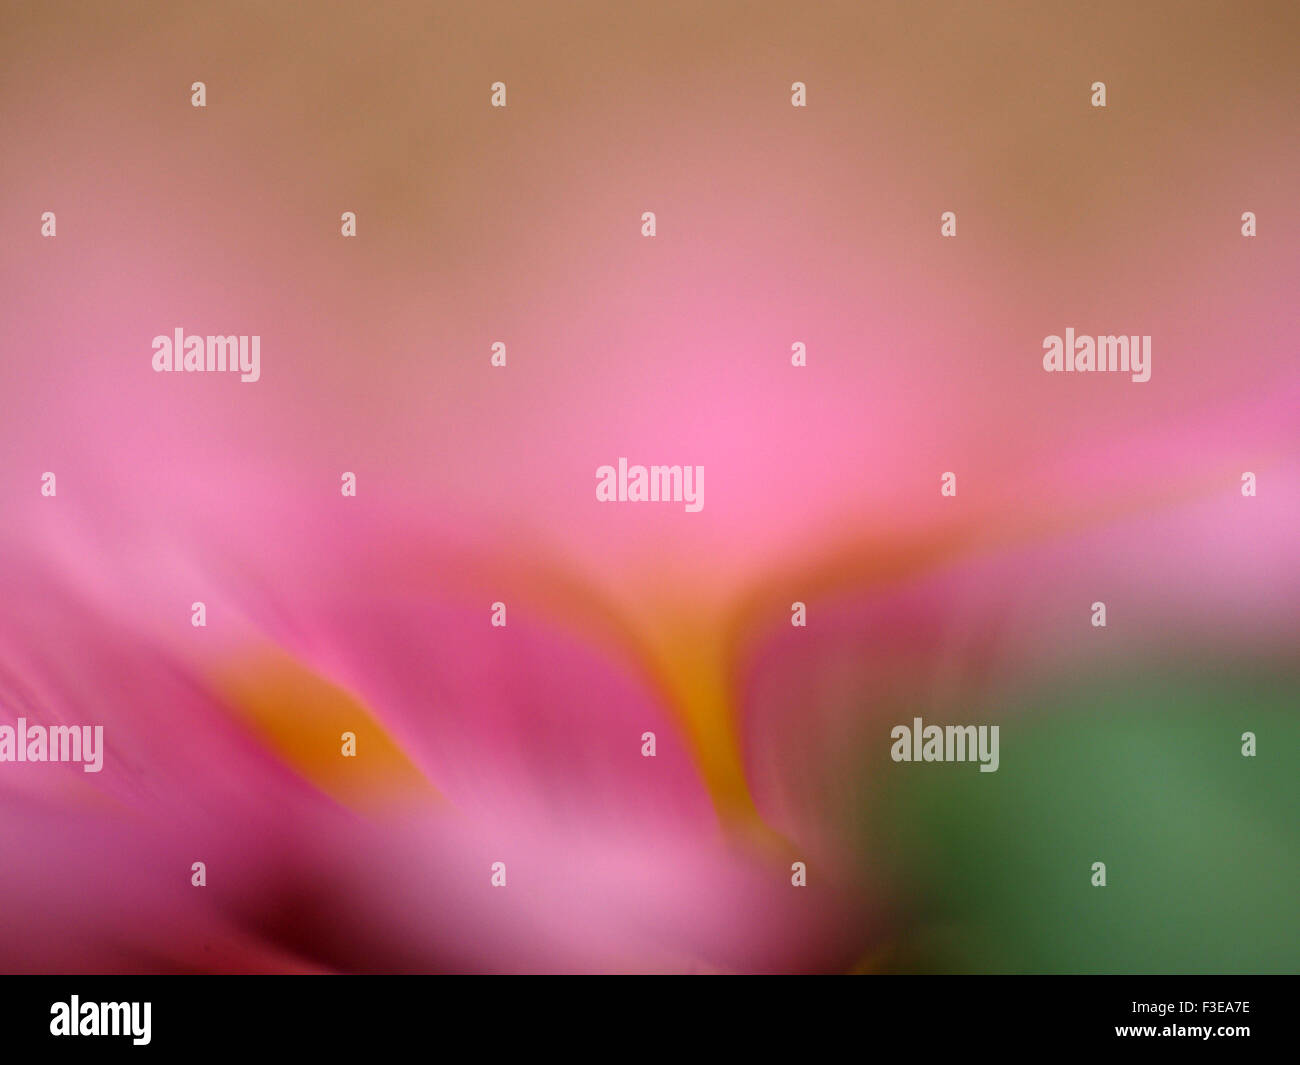 Macro flower photography Stock Photo